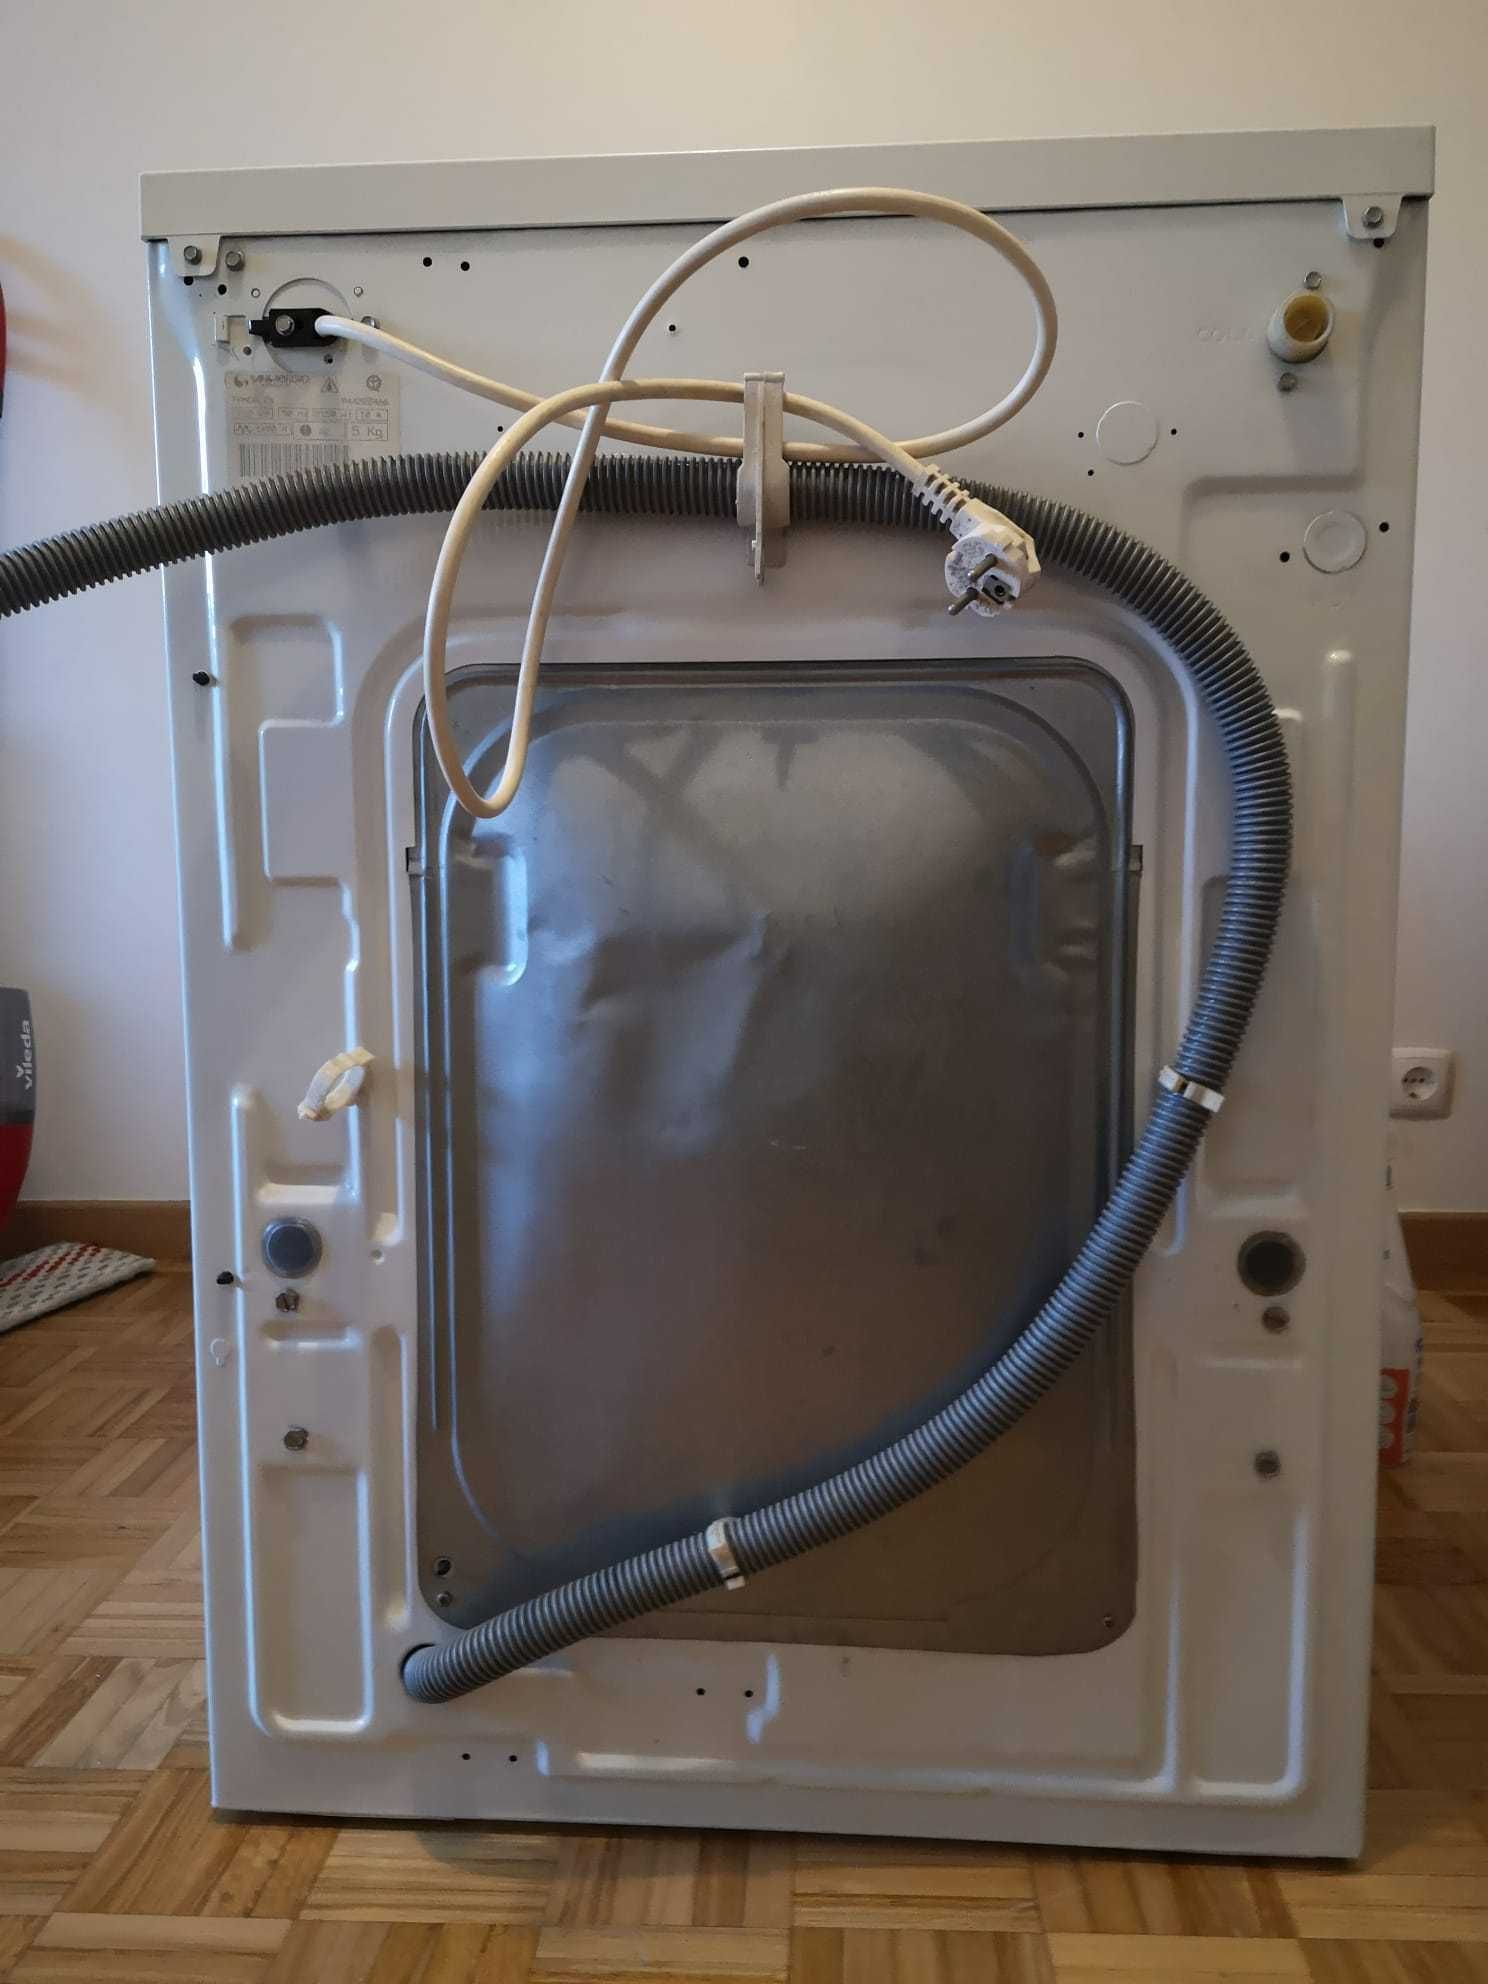 Máquina Lavar Roupa